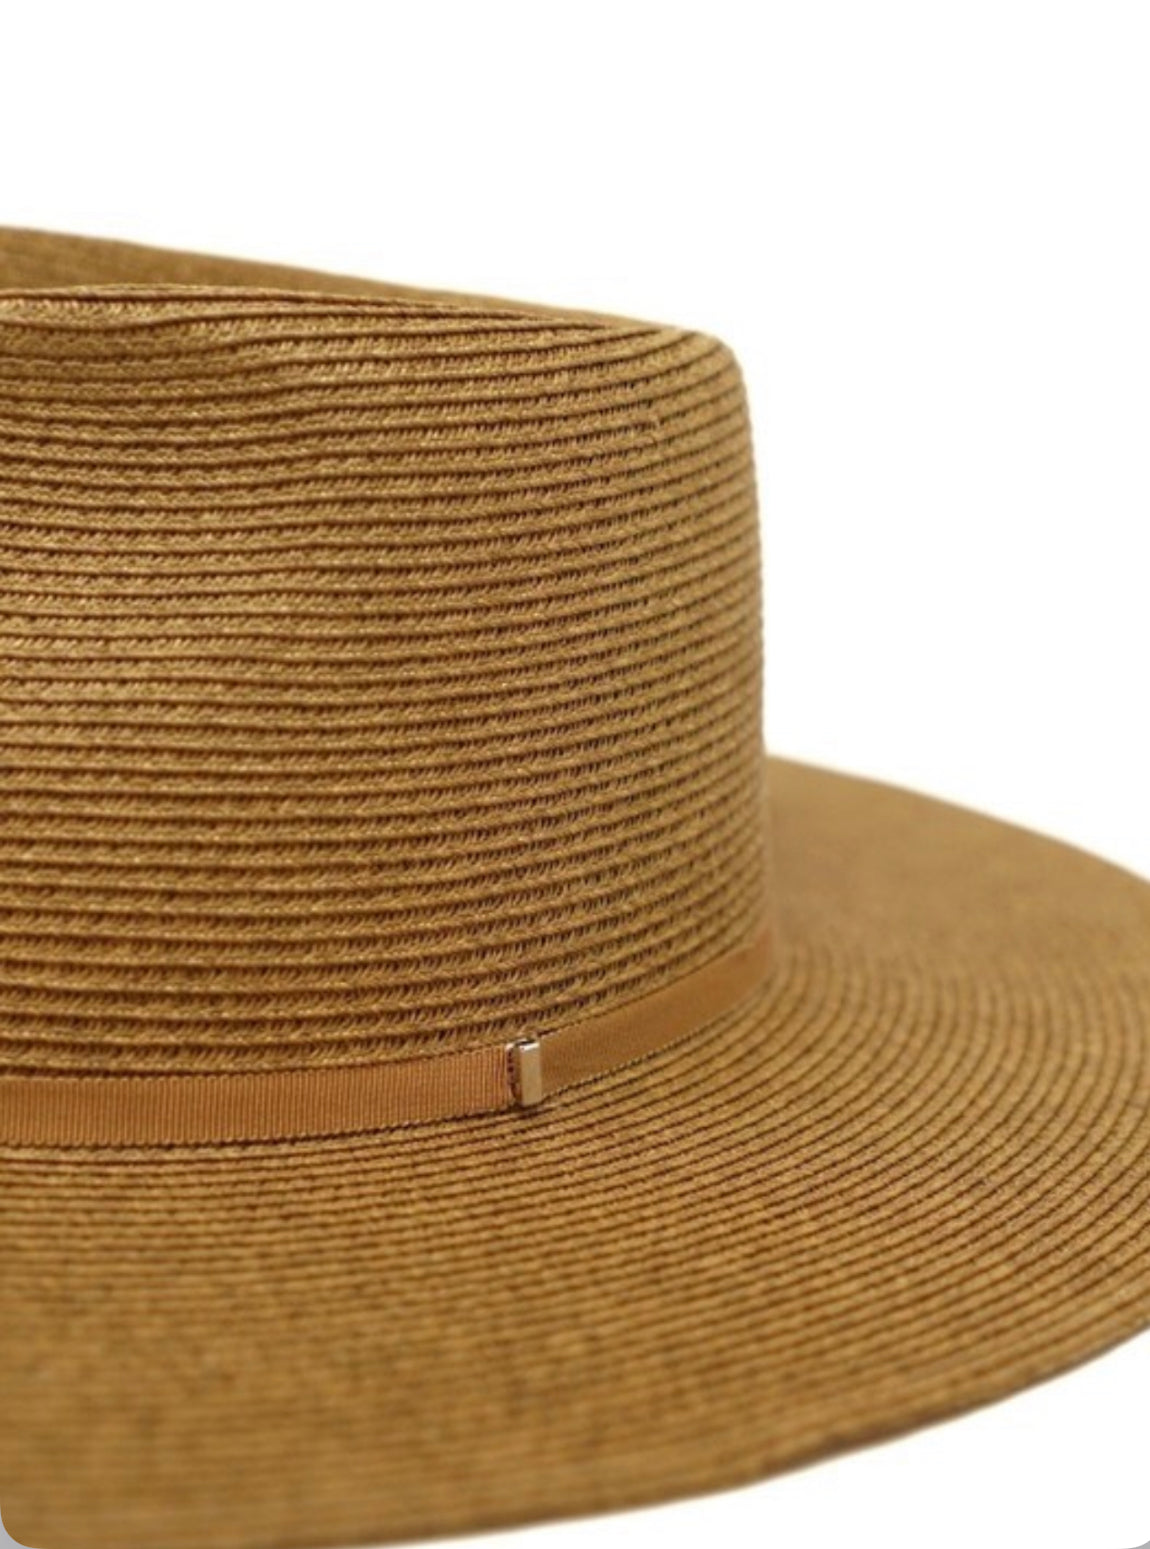 Koba Rancher Straw Hat